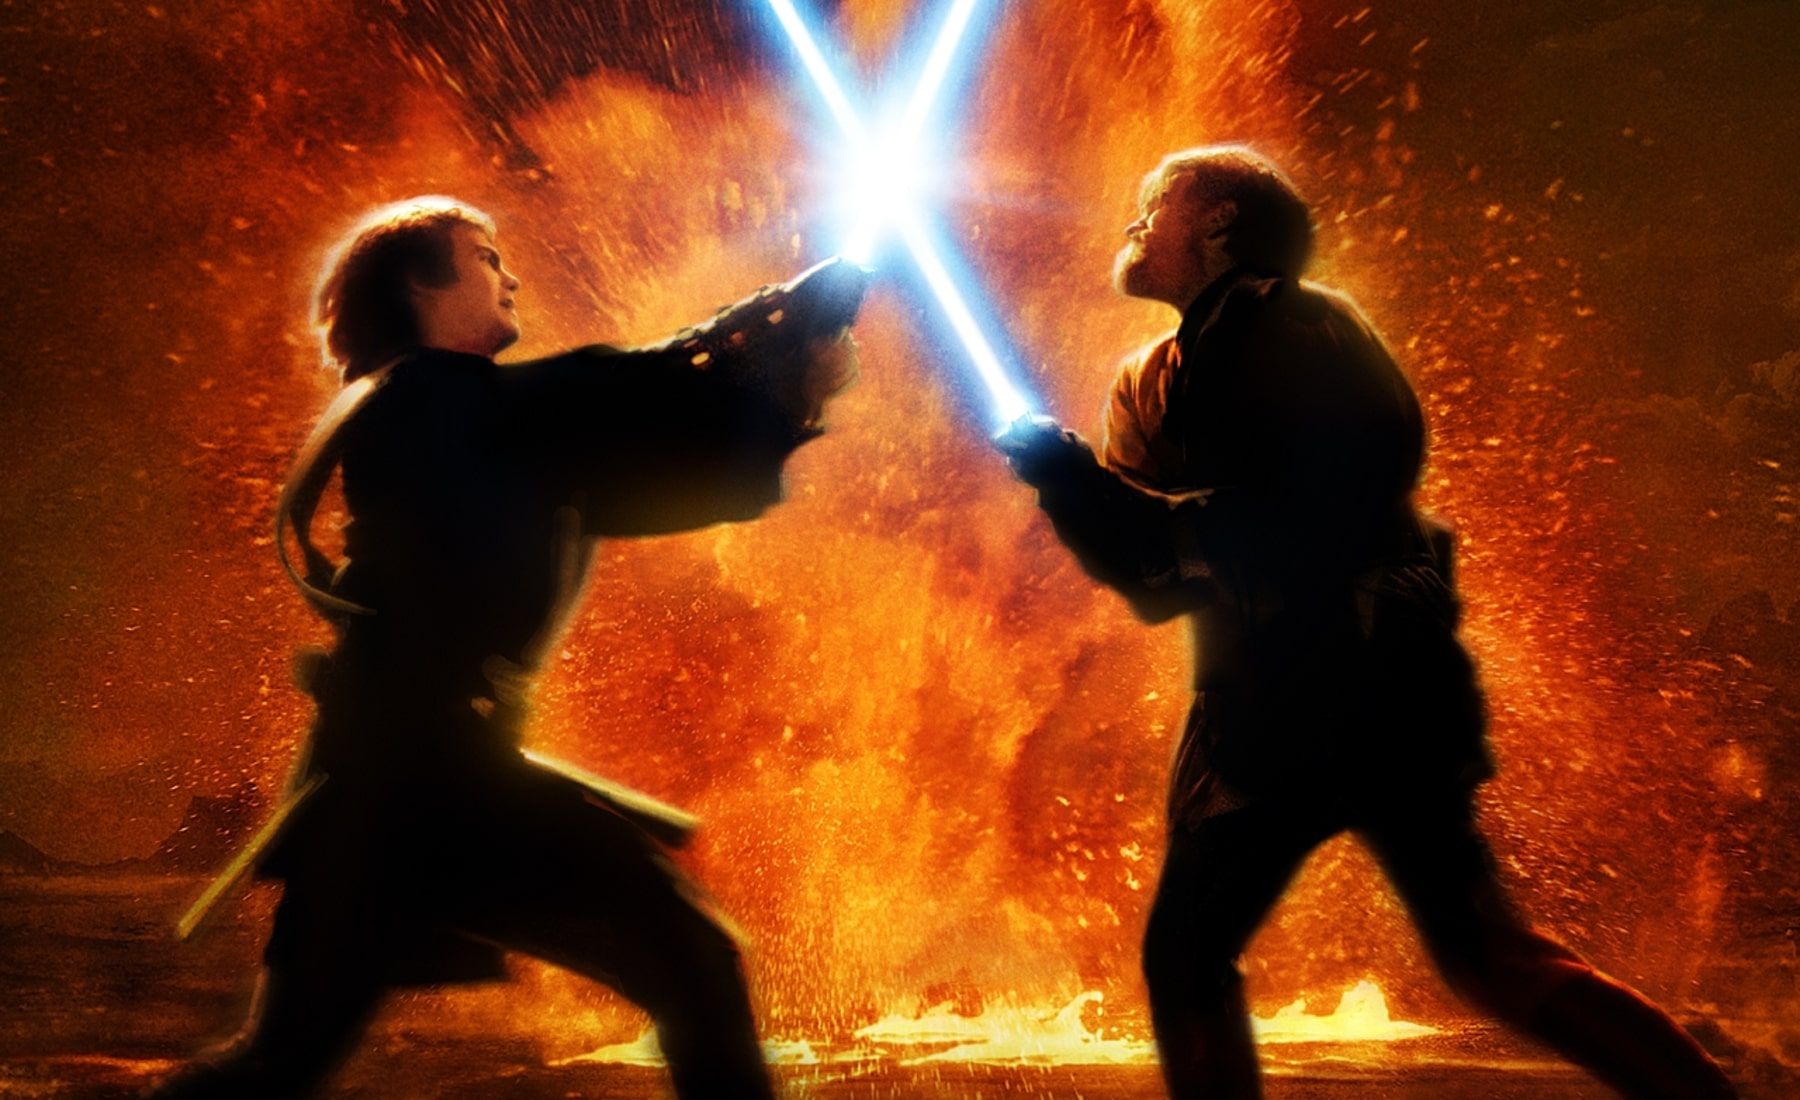 Hayden Christensen will play Darth Vader in Obi-Wan Kenobi series